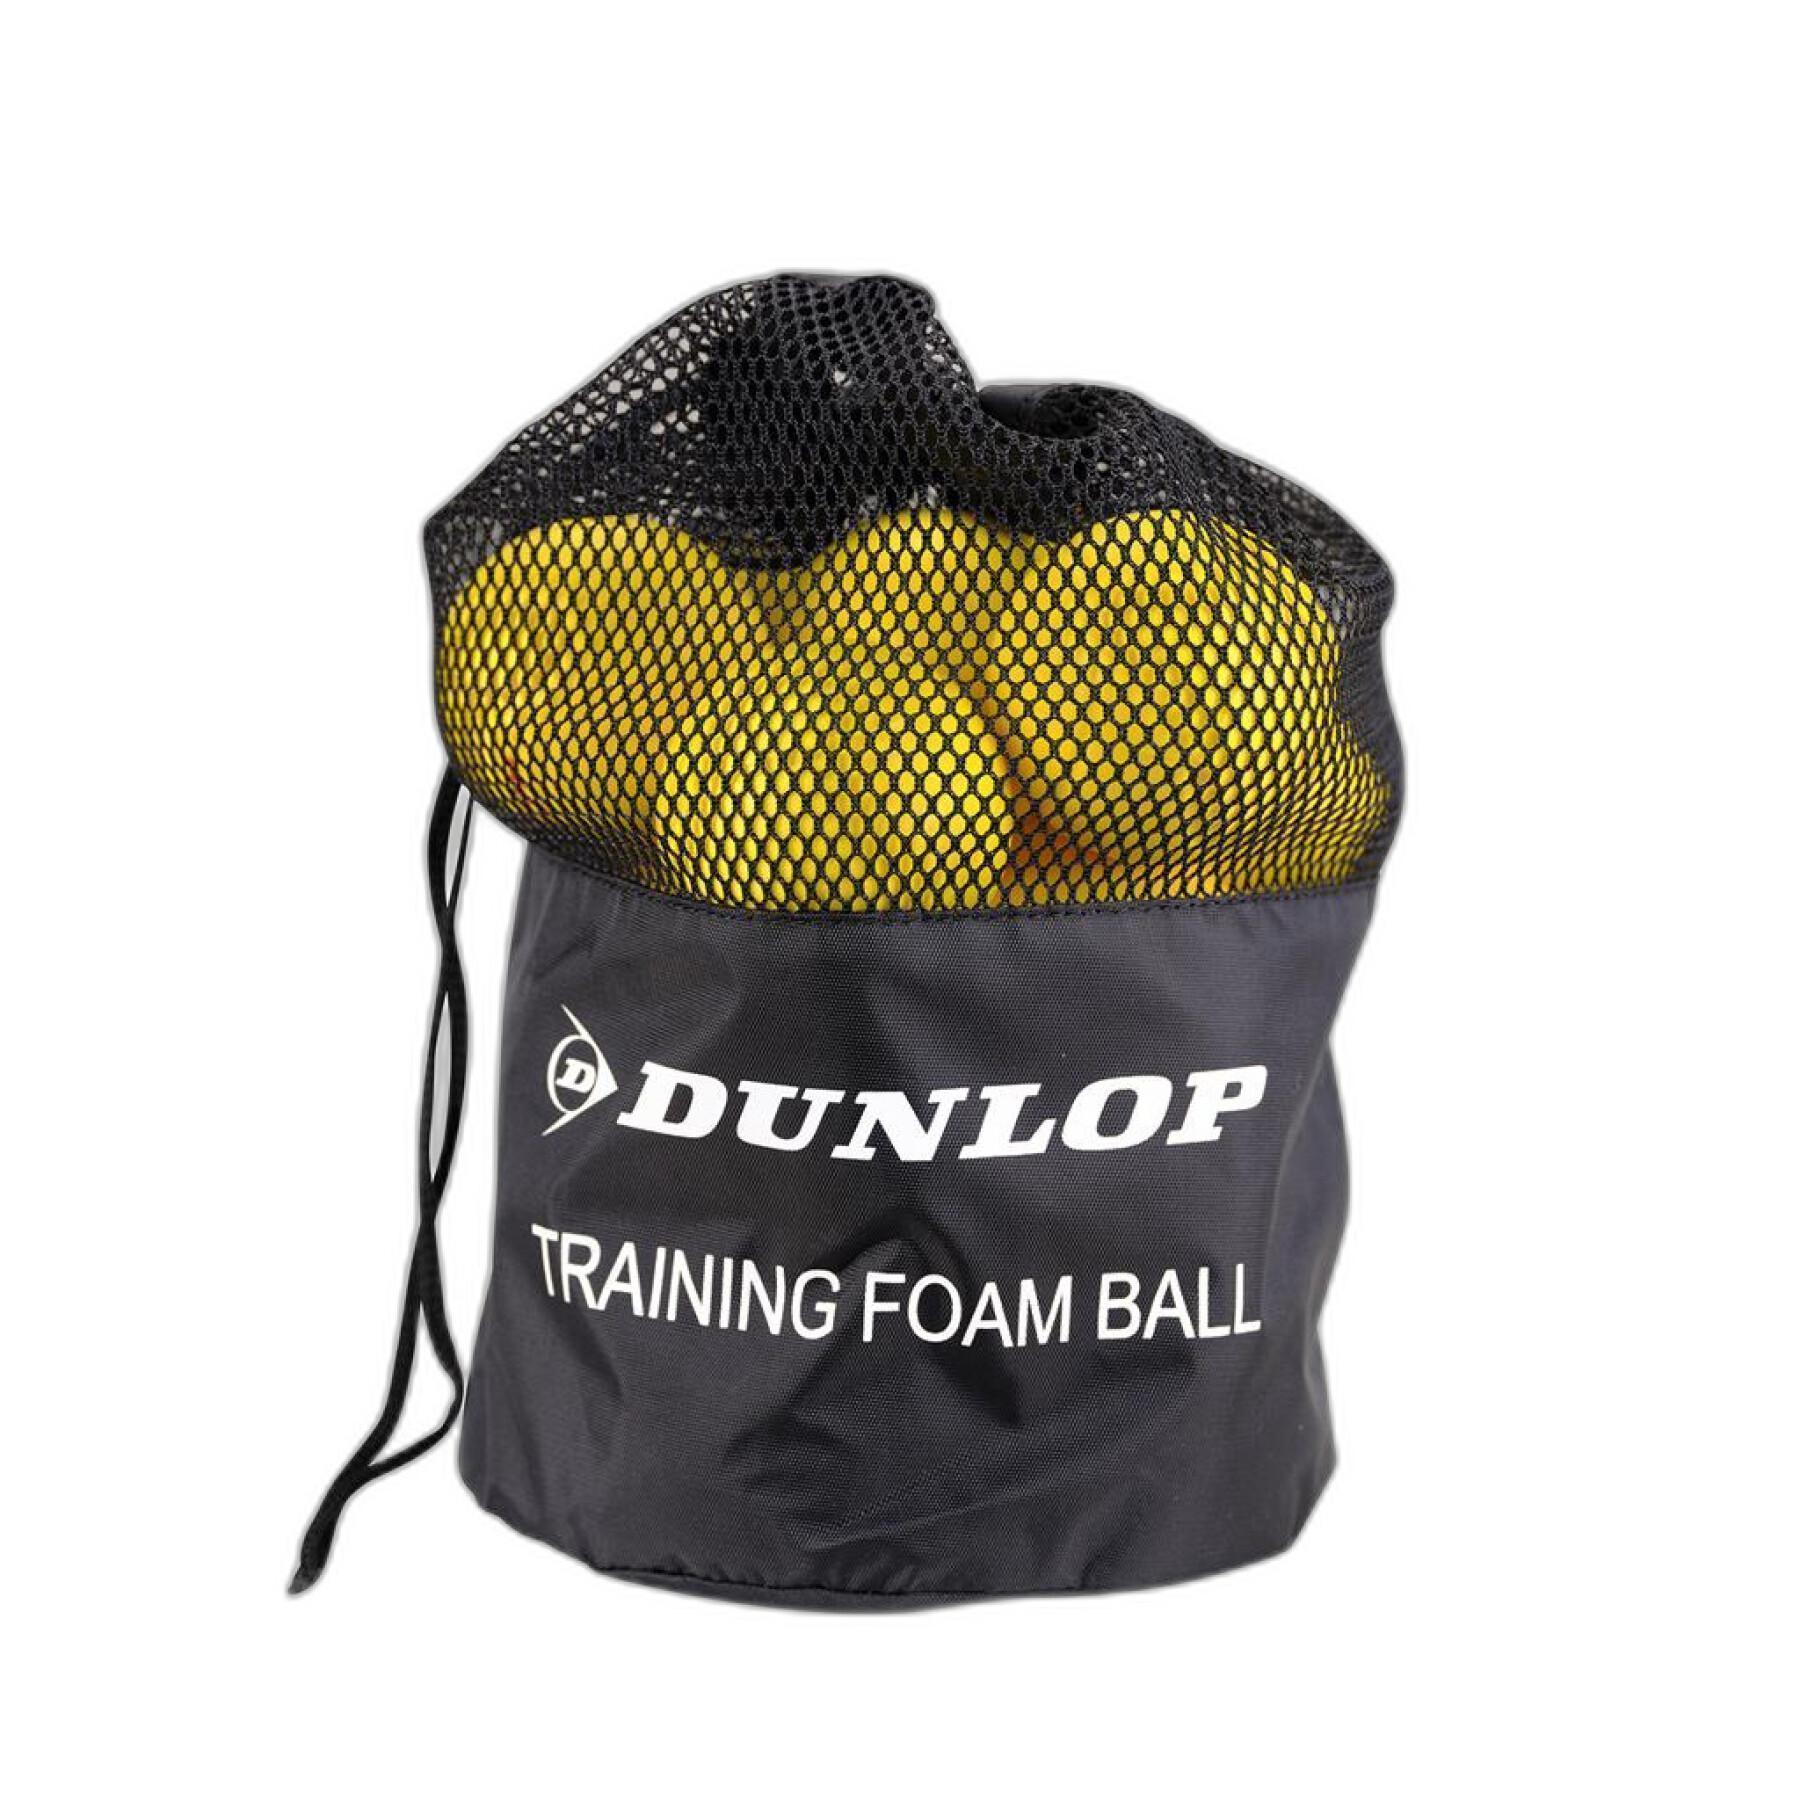 Conjunto de 12 bolas de ténis Dunlop Training Foam